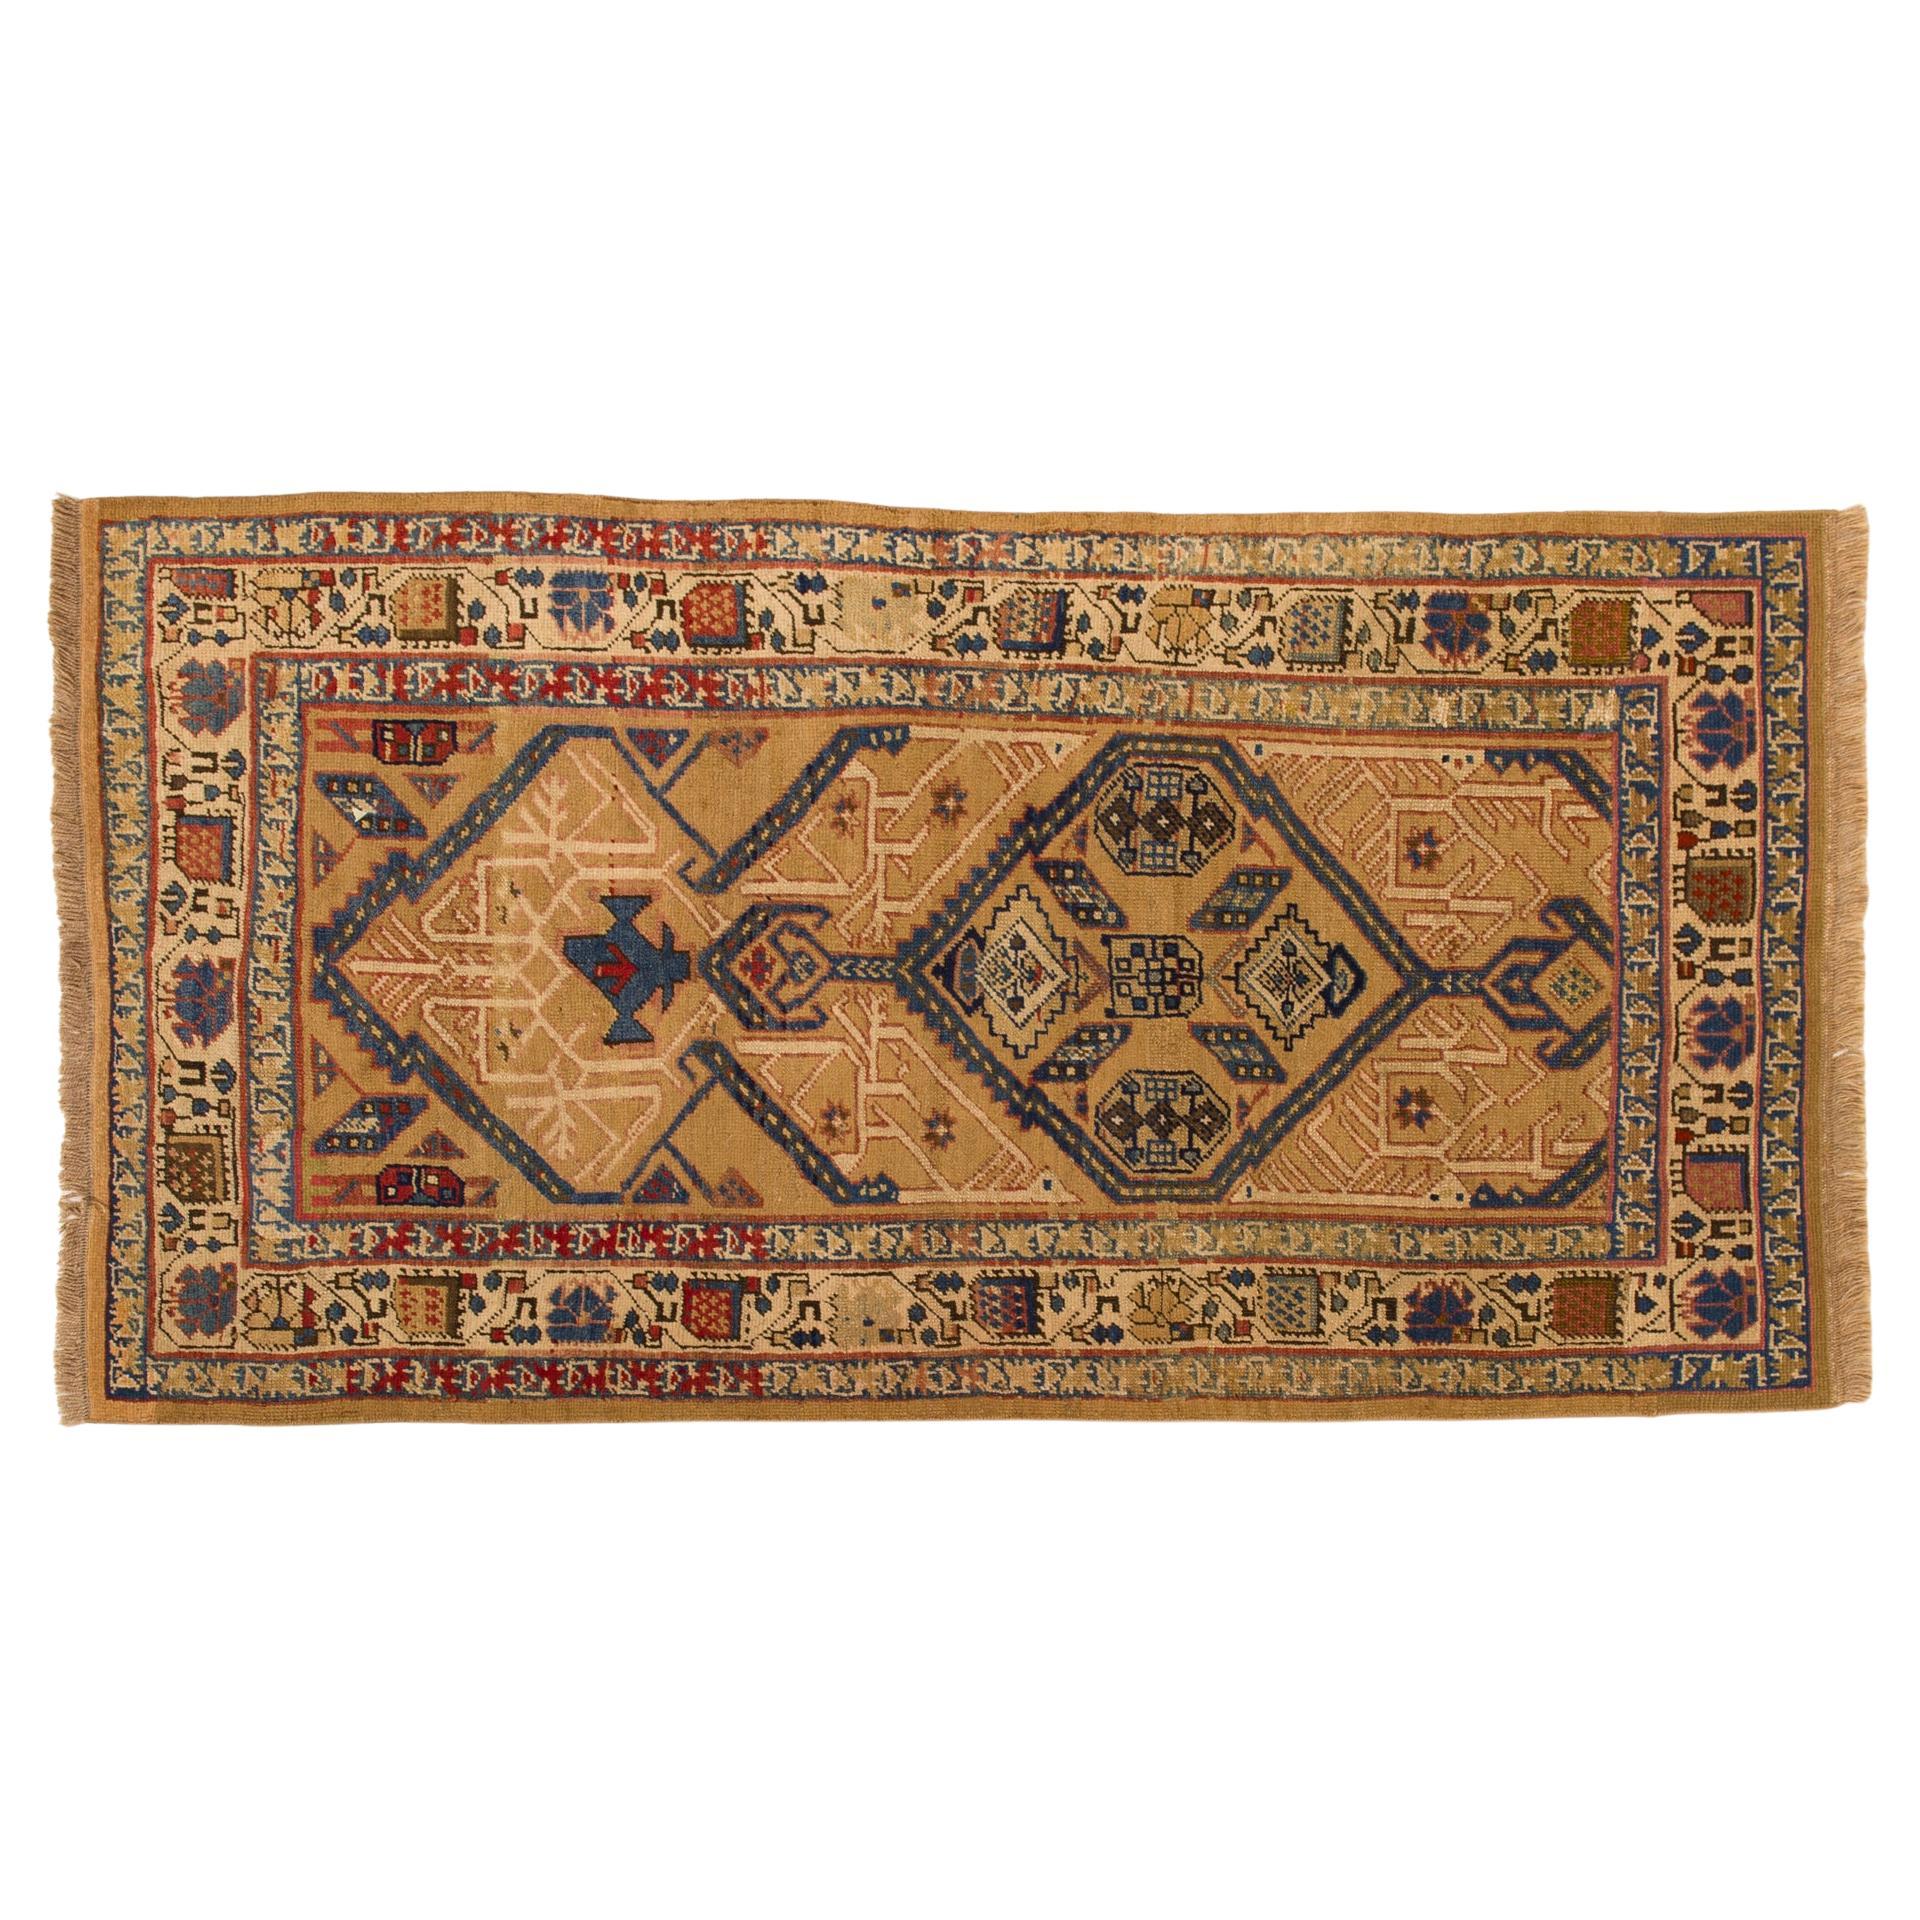 Camel Carpet from Azerbaijan